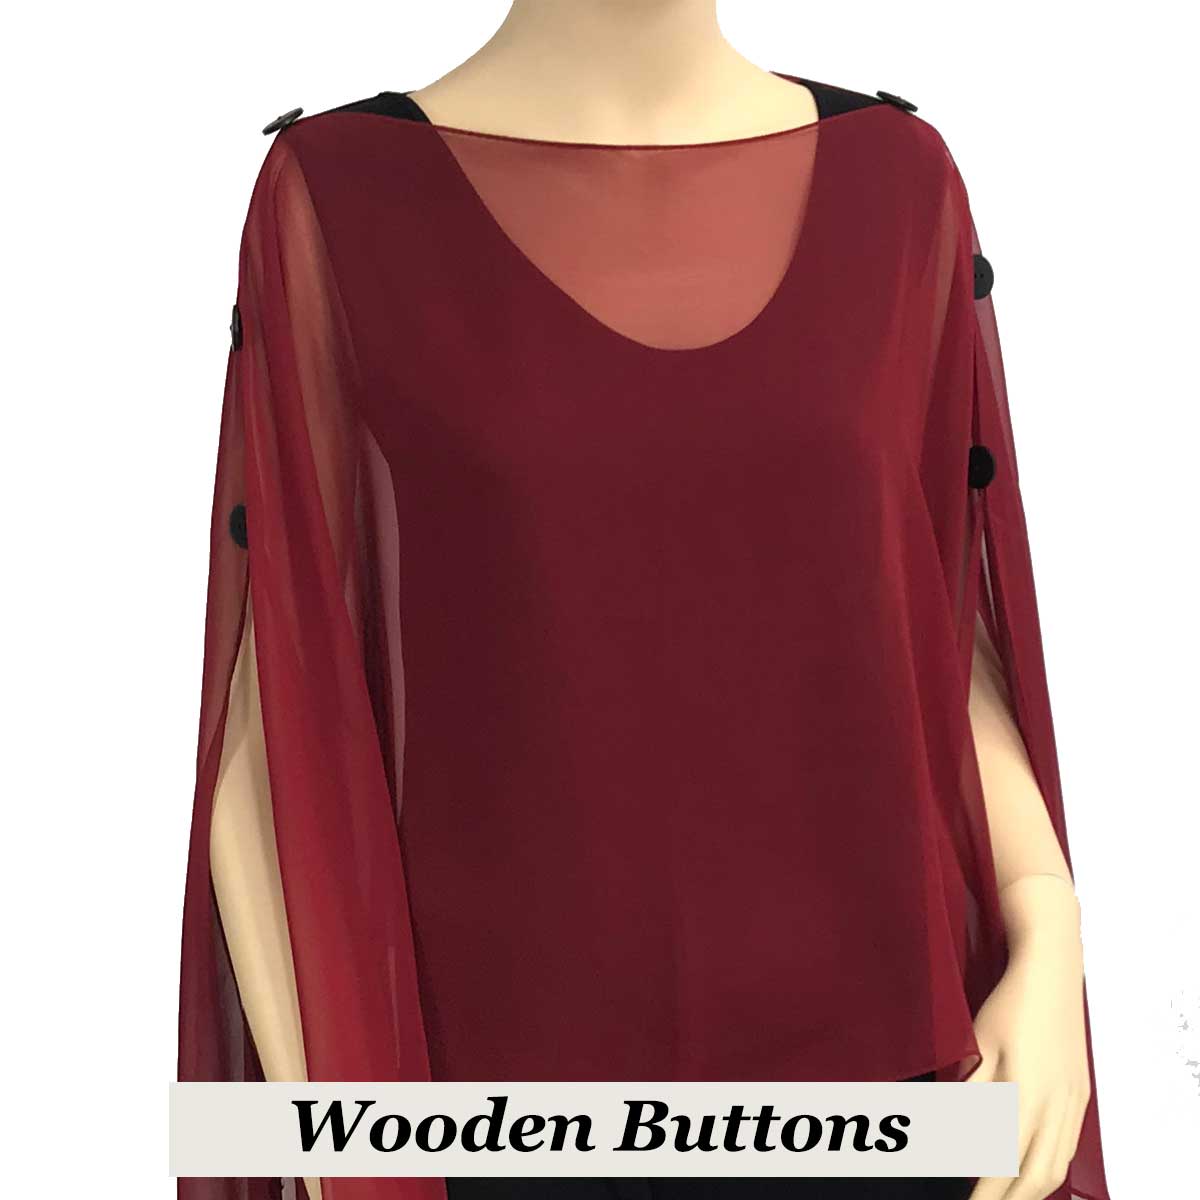 SBU - Wooden Buttons<br> Solid Burgundy